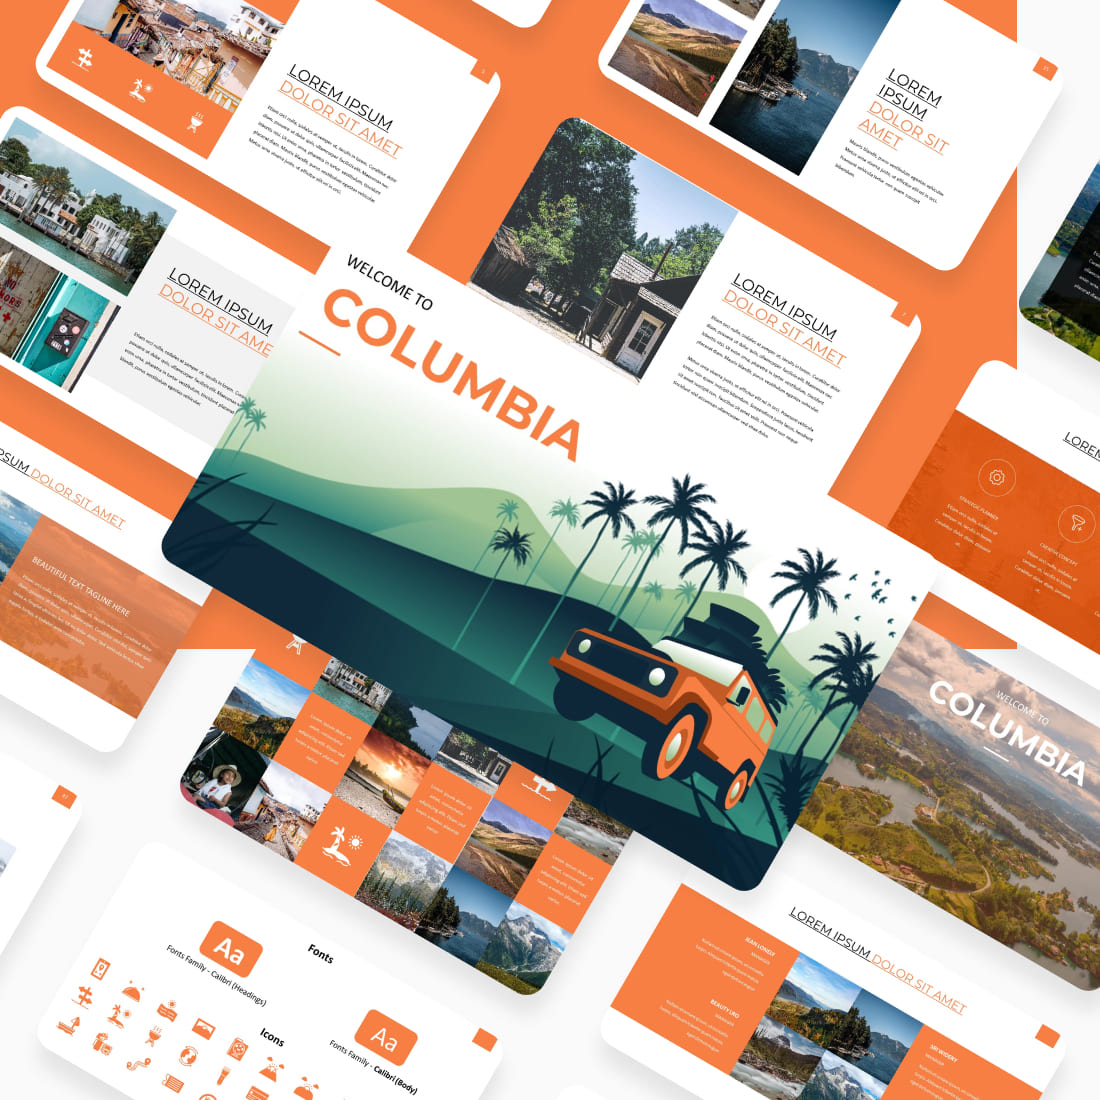 Сolombia Travel Google Slides Theme cover image.